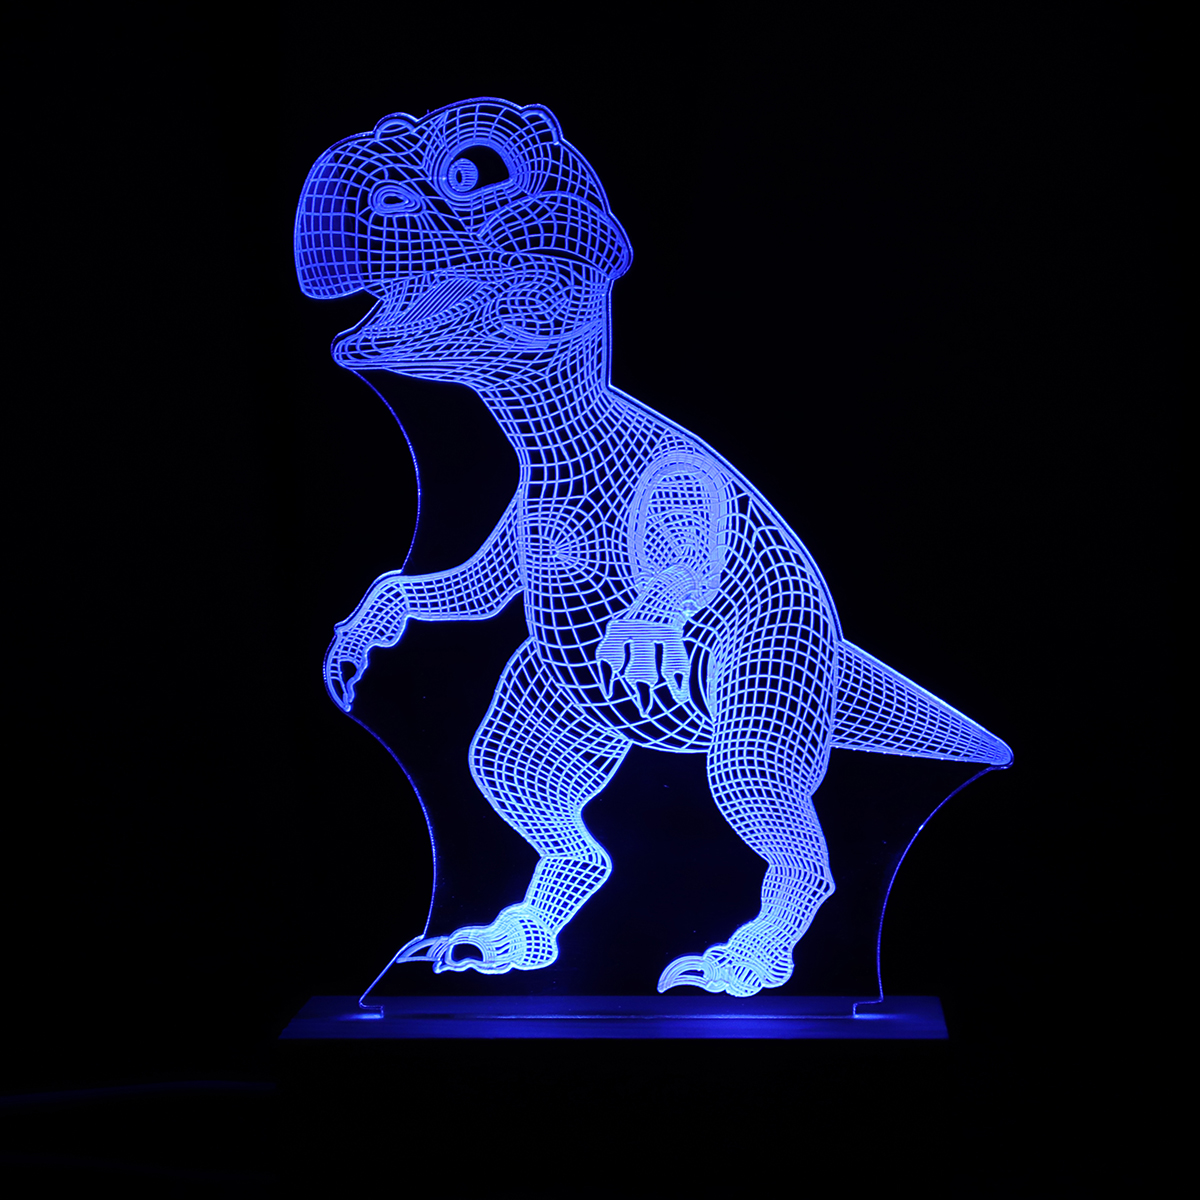 USB-3D-Dinosaur-LED-Desk-Lamp-Three-Colors-Night-Light-for-Bedroom-Home-Gift-Party-Decor-1708776-10